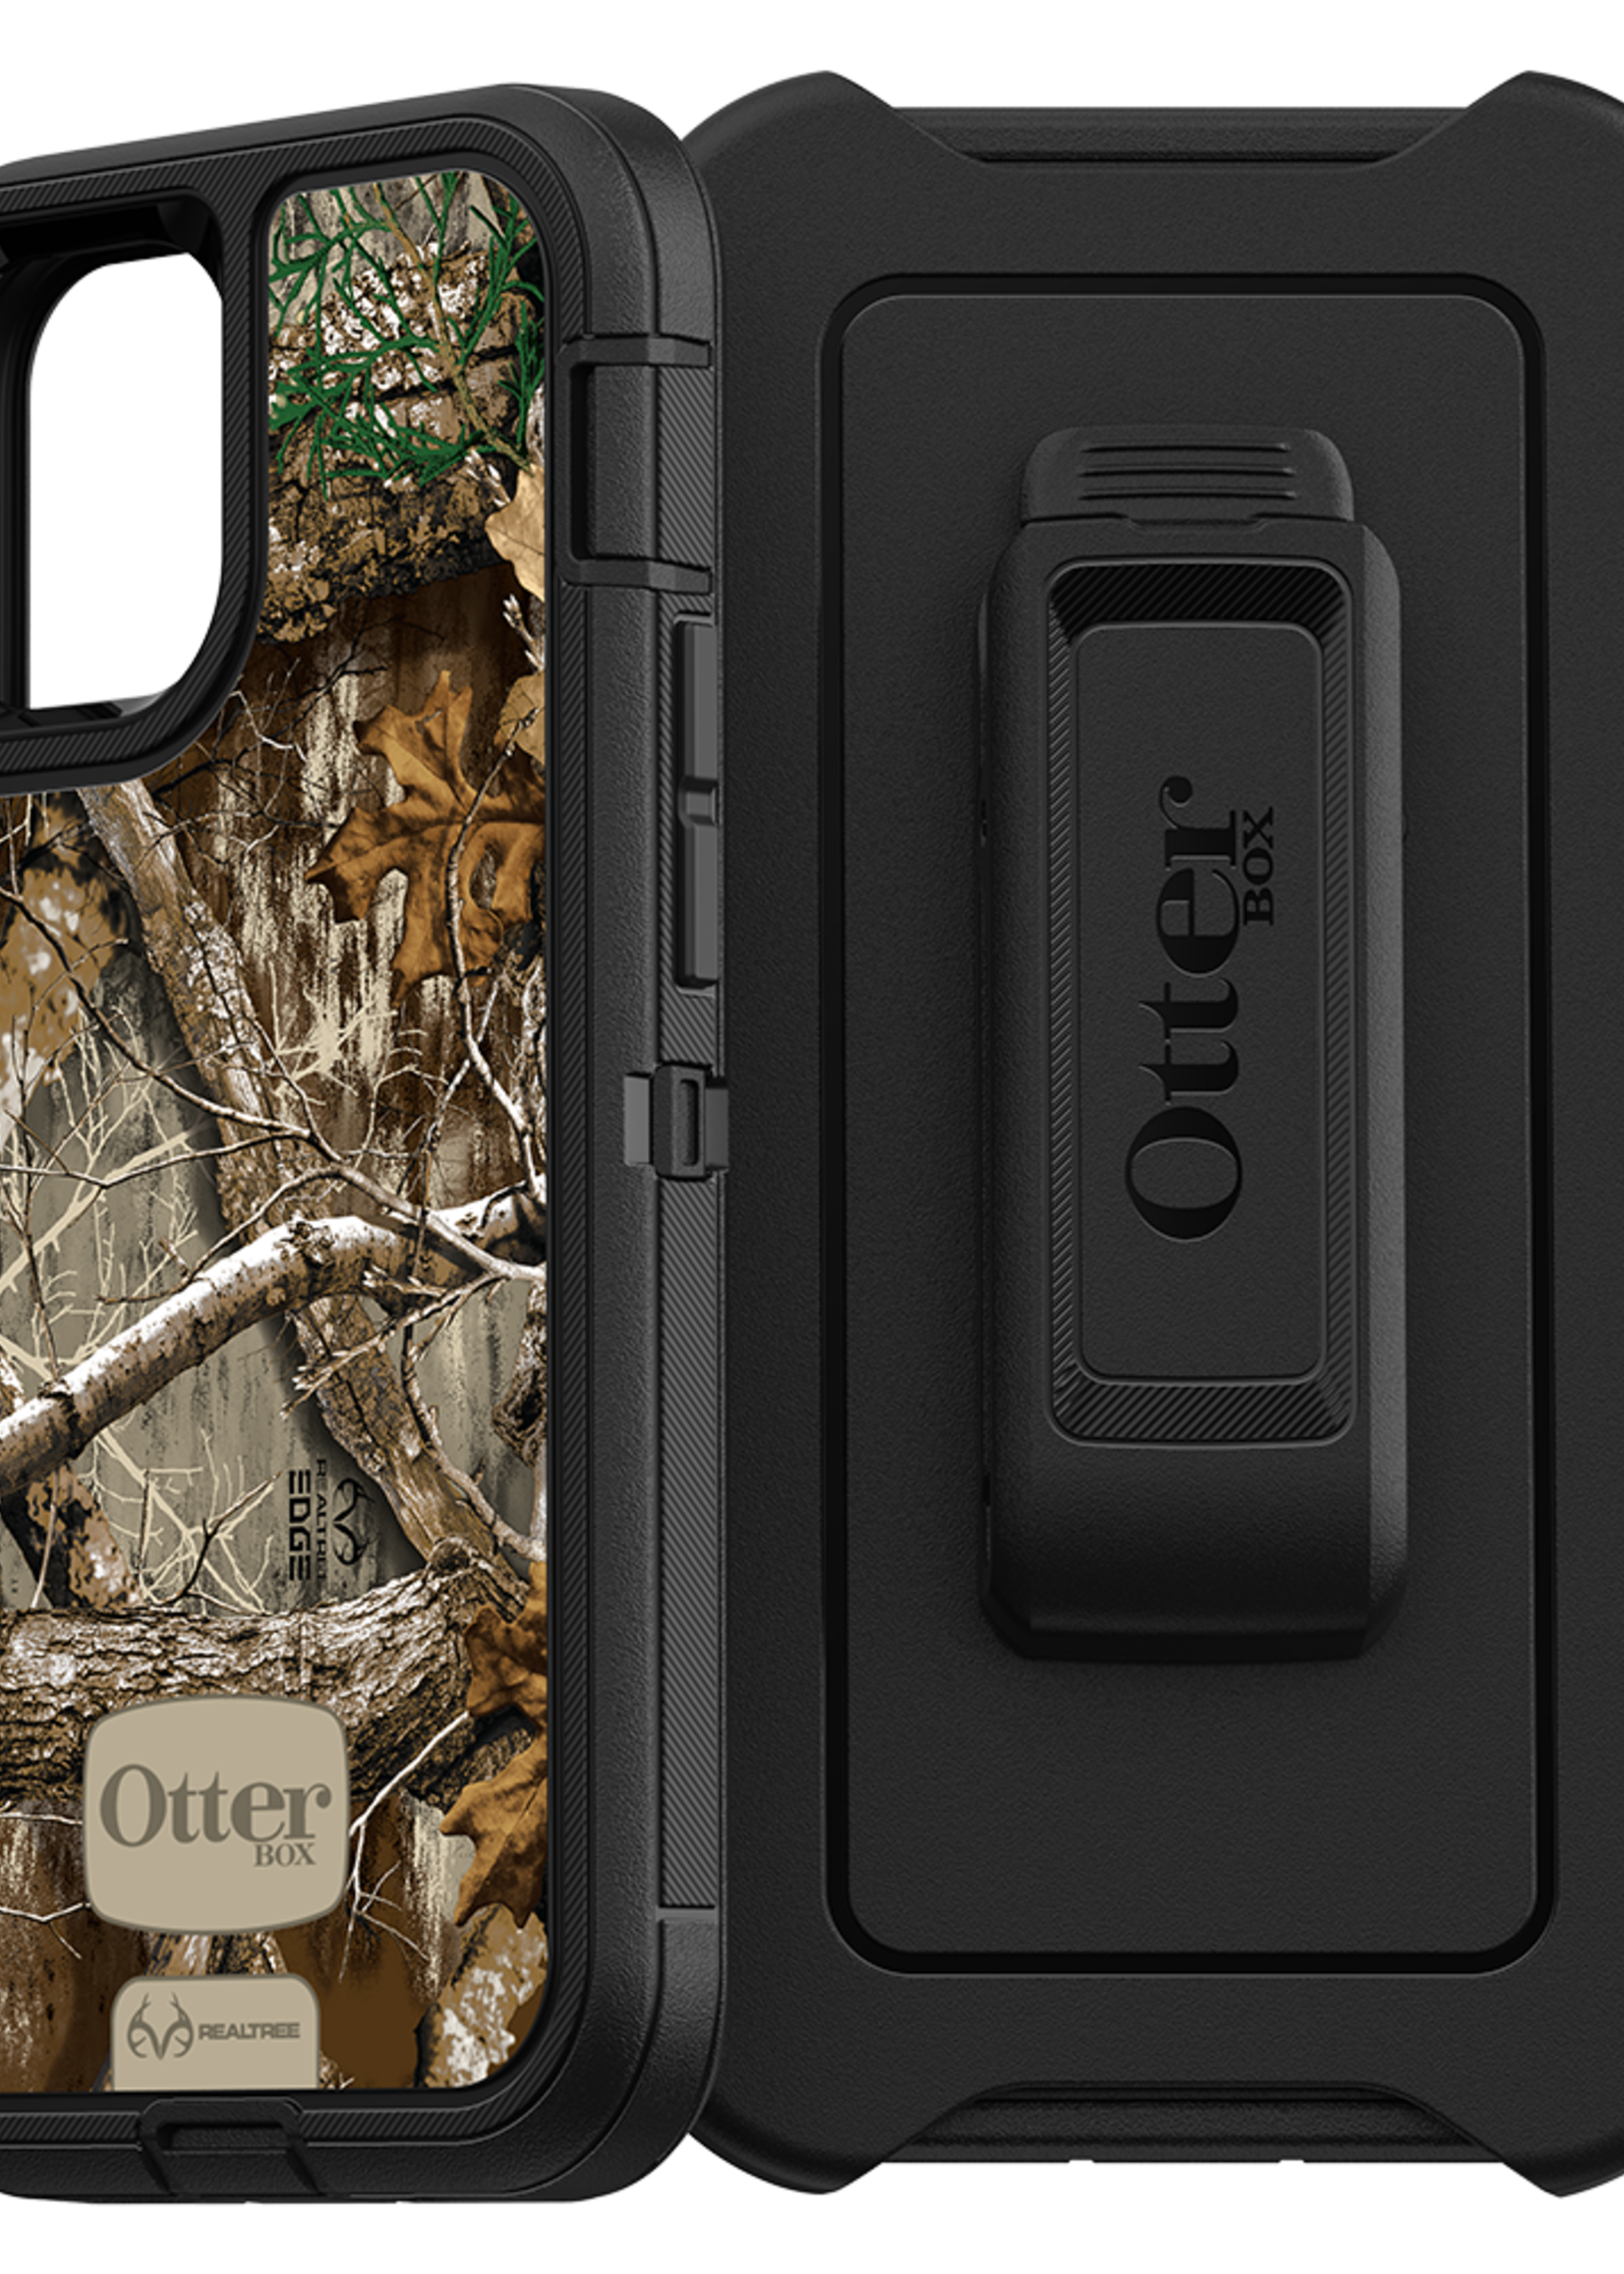 Otterbox OtterBox - Defender Case for Apple iPhone 12 mini - Realtree Edge  Black